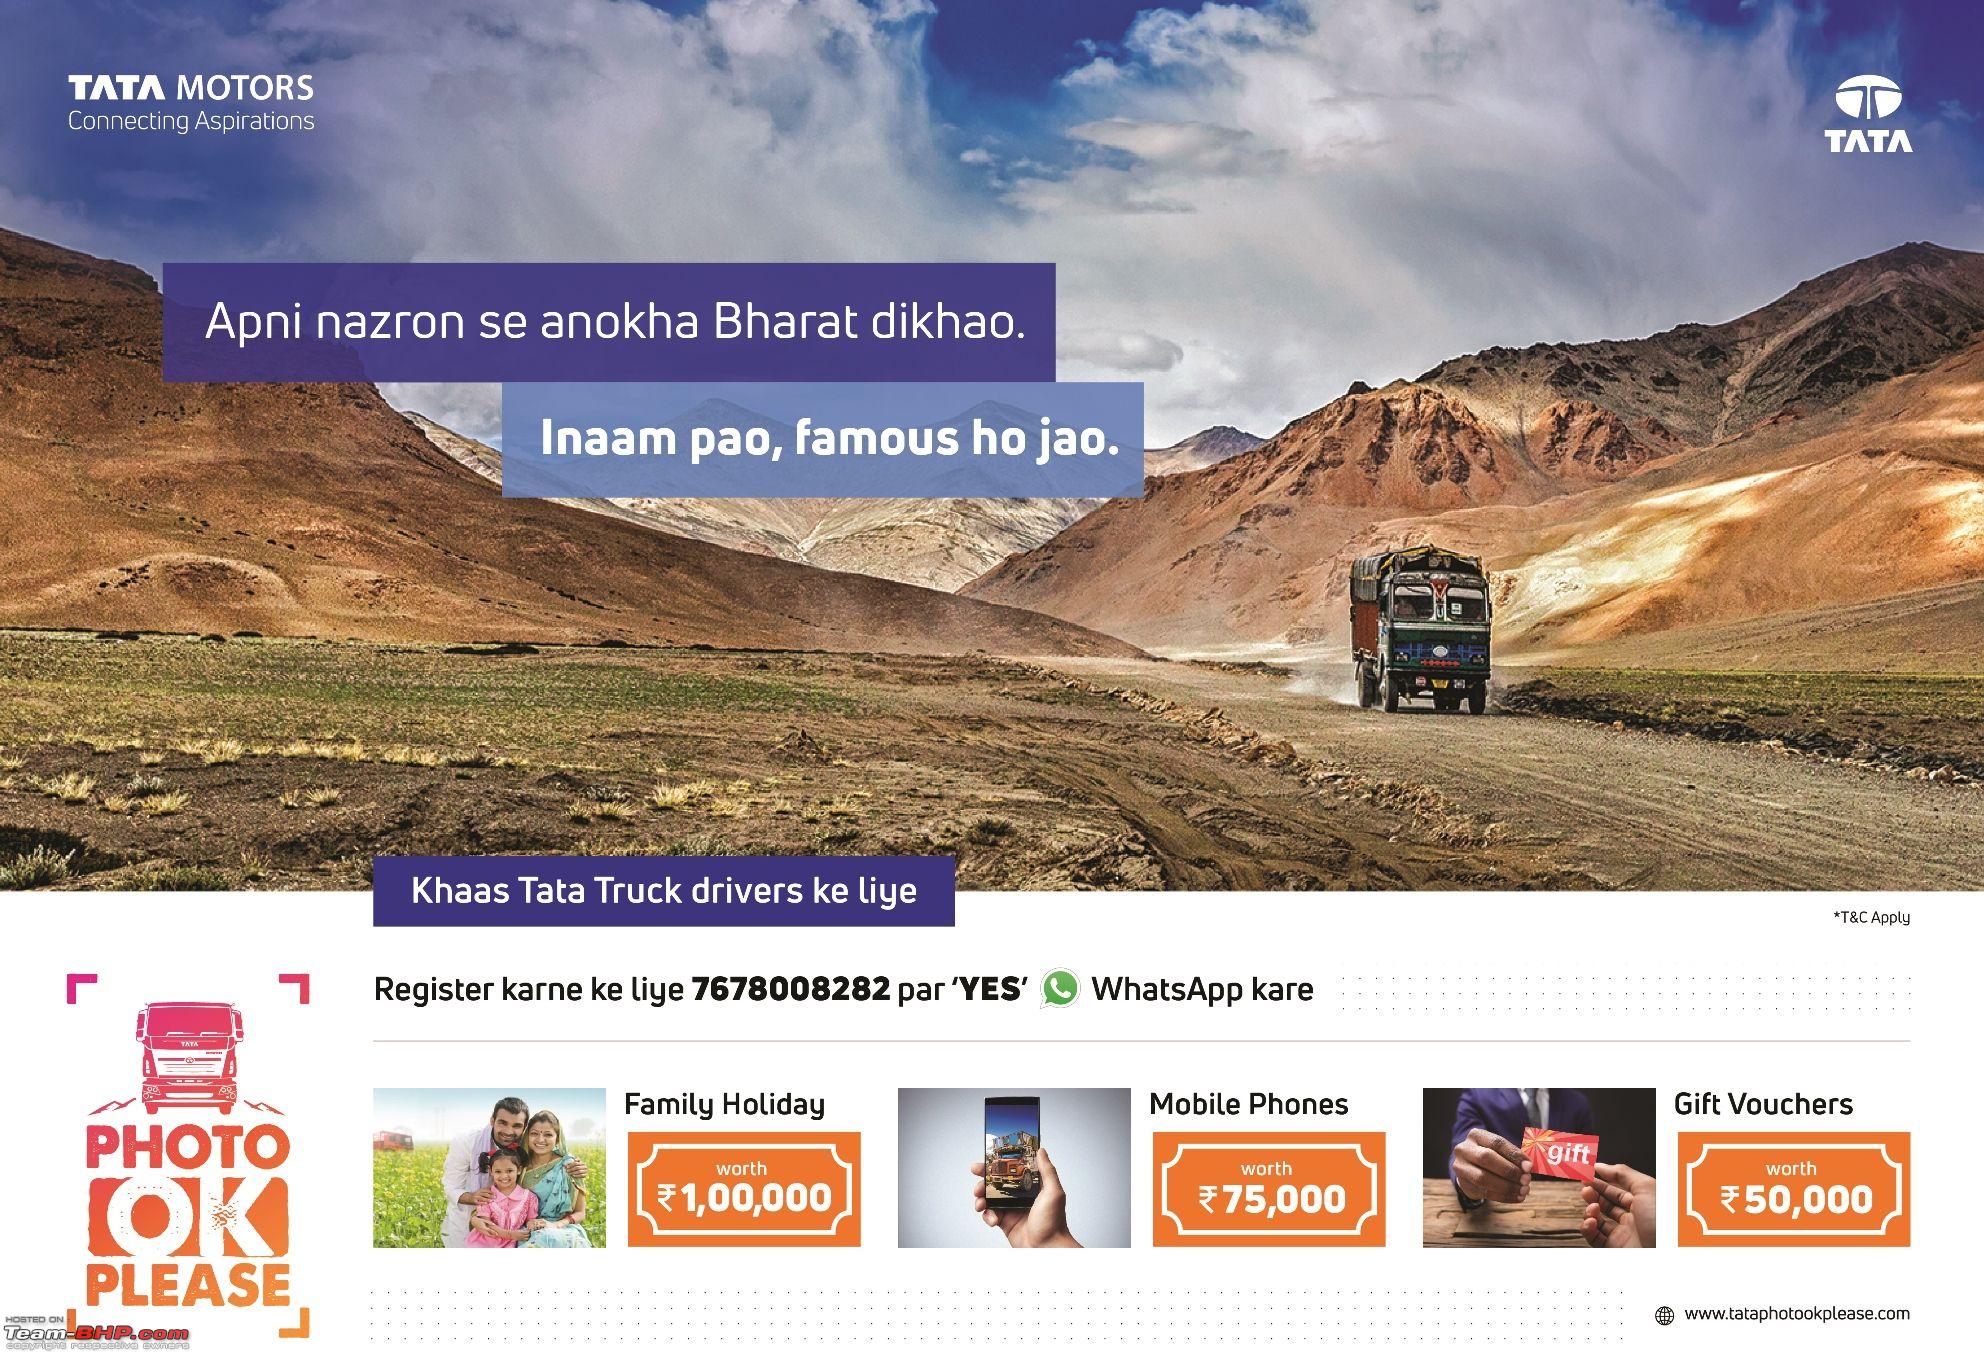 Tata Motors' 'Photo OK Please' contest for truckers - Team-BHP